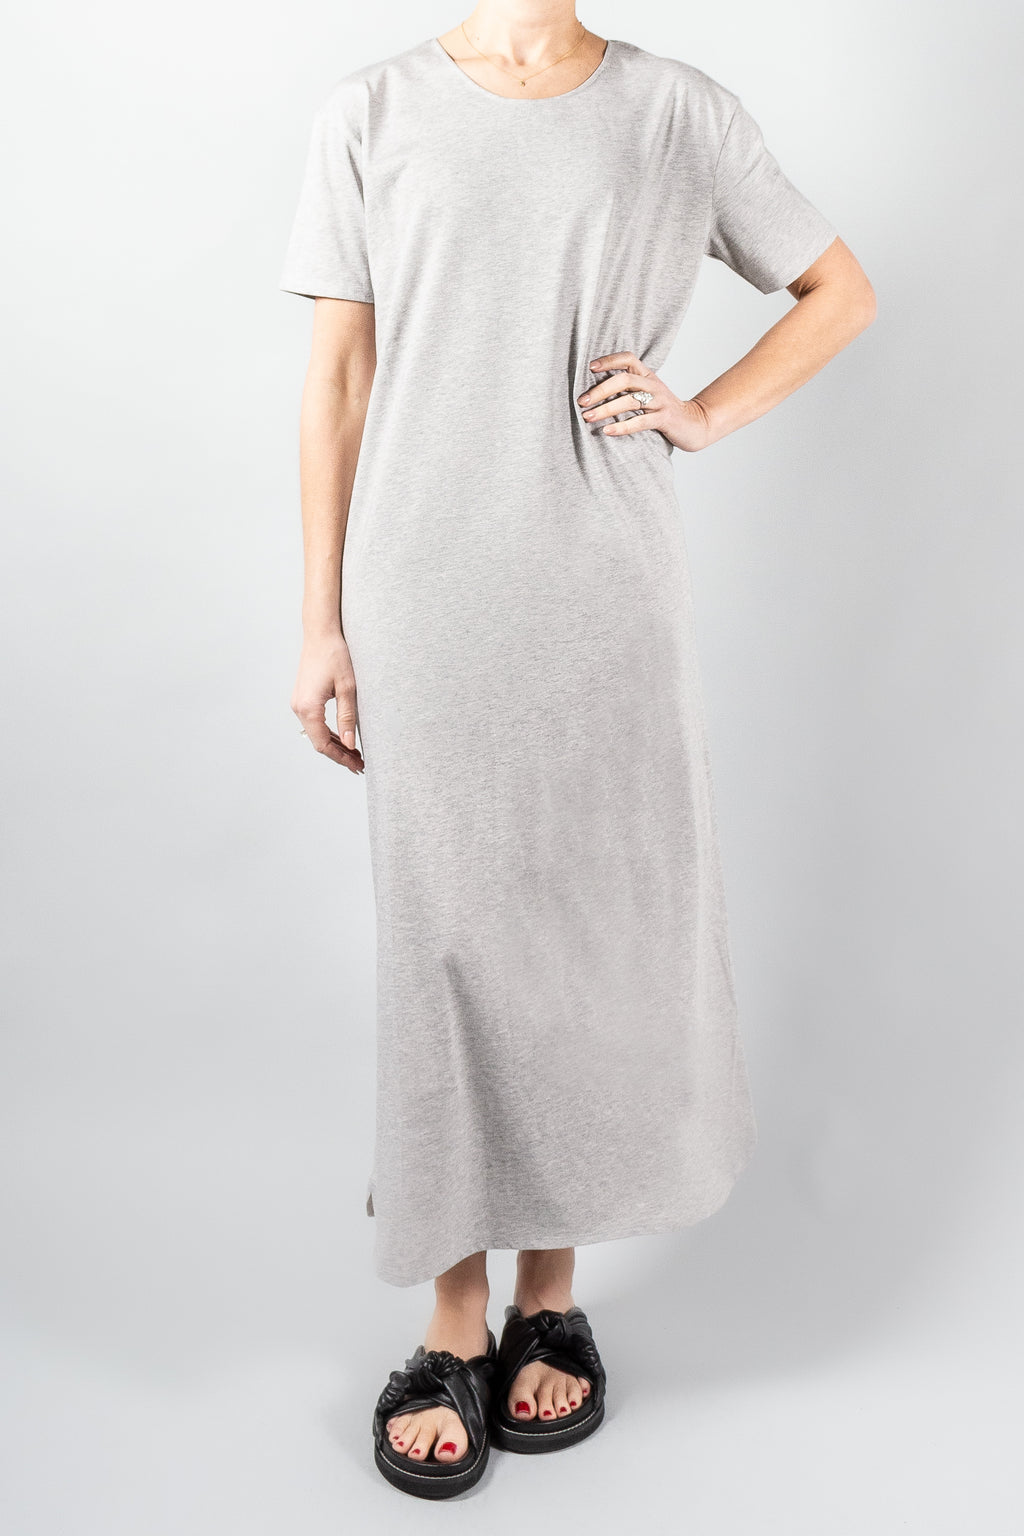 NWT Lou & Grey Cotton Summer V-Neck Dress. Oatmeal. Small